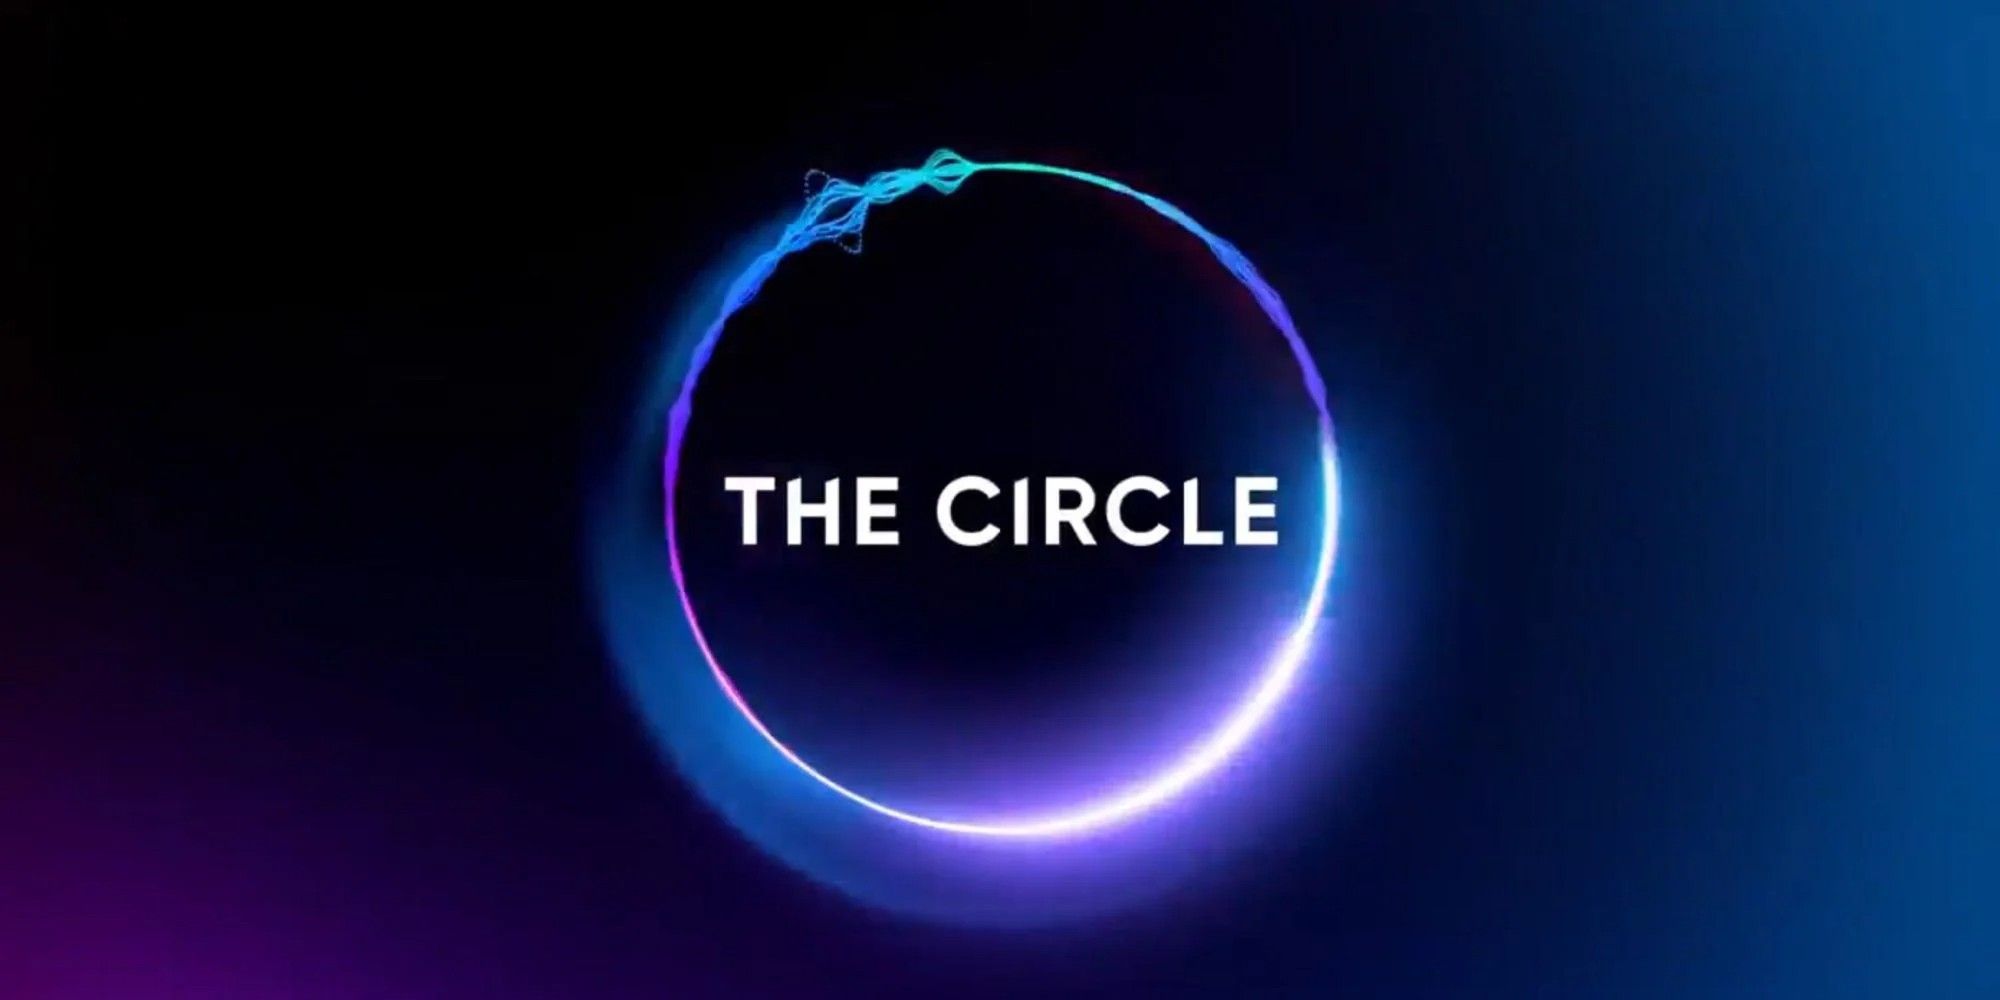 Netflixs-The-Circle-logo